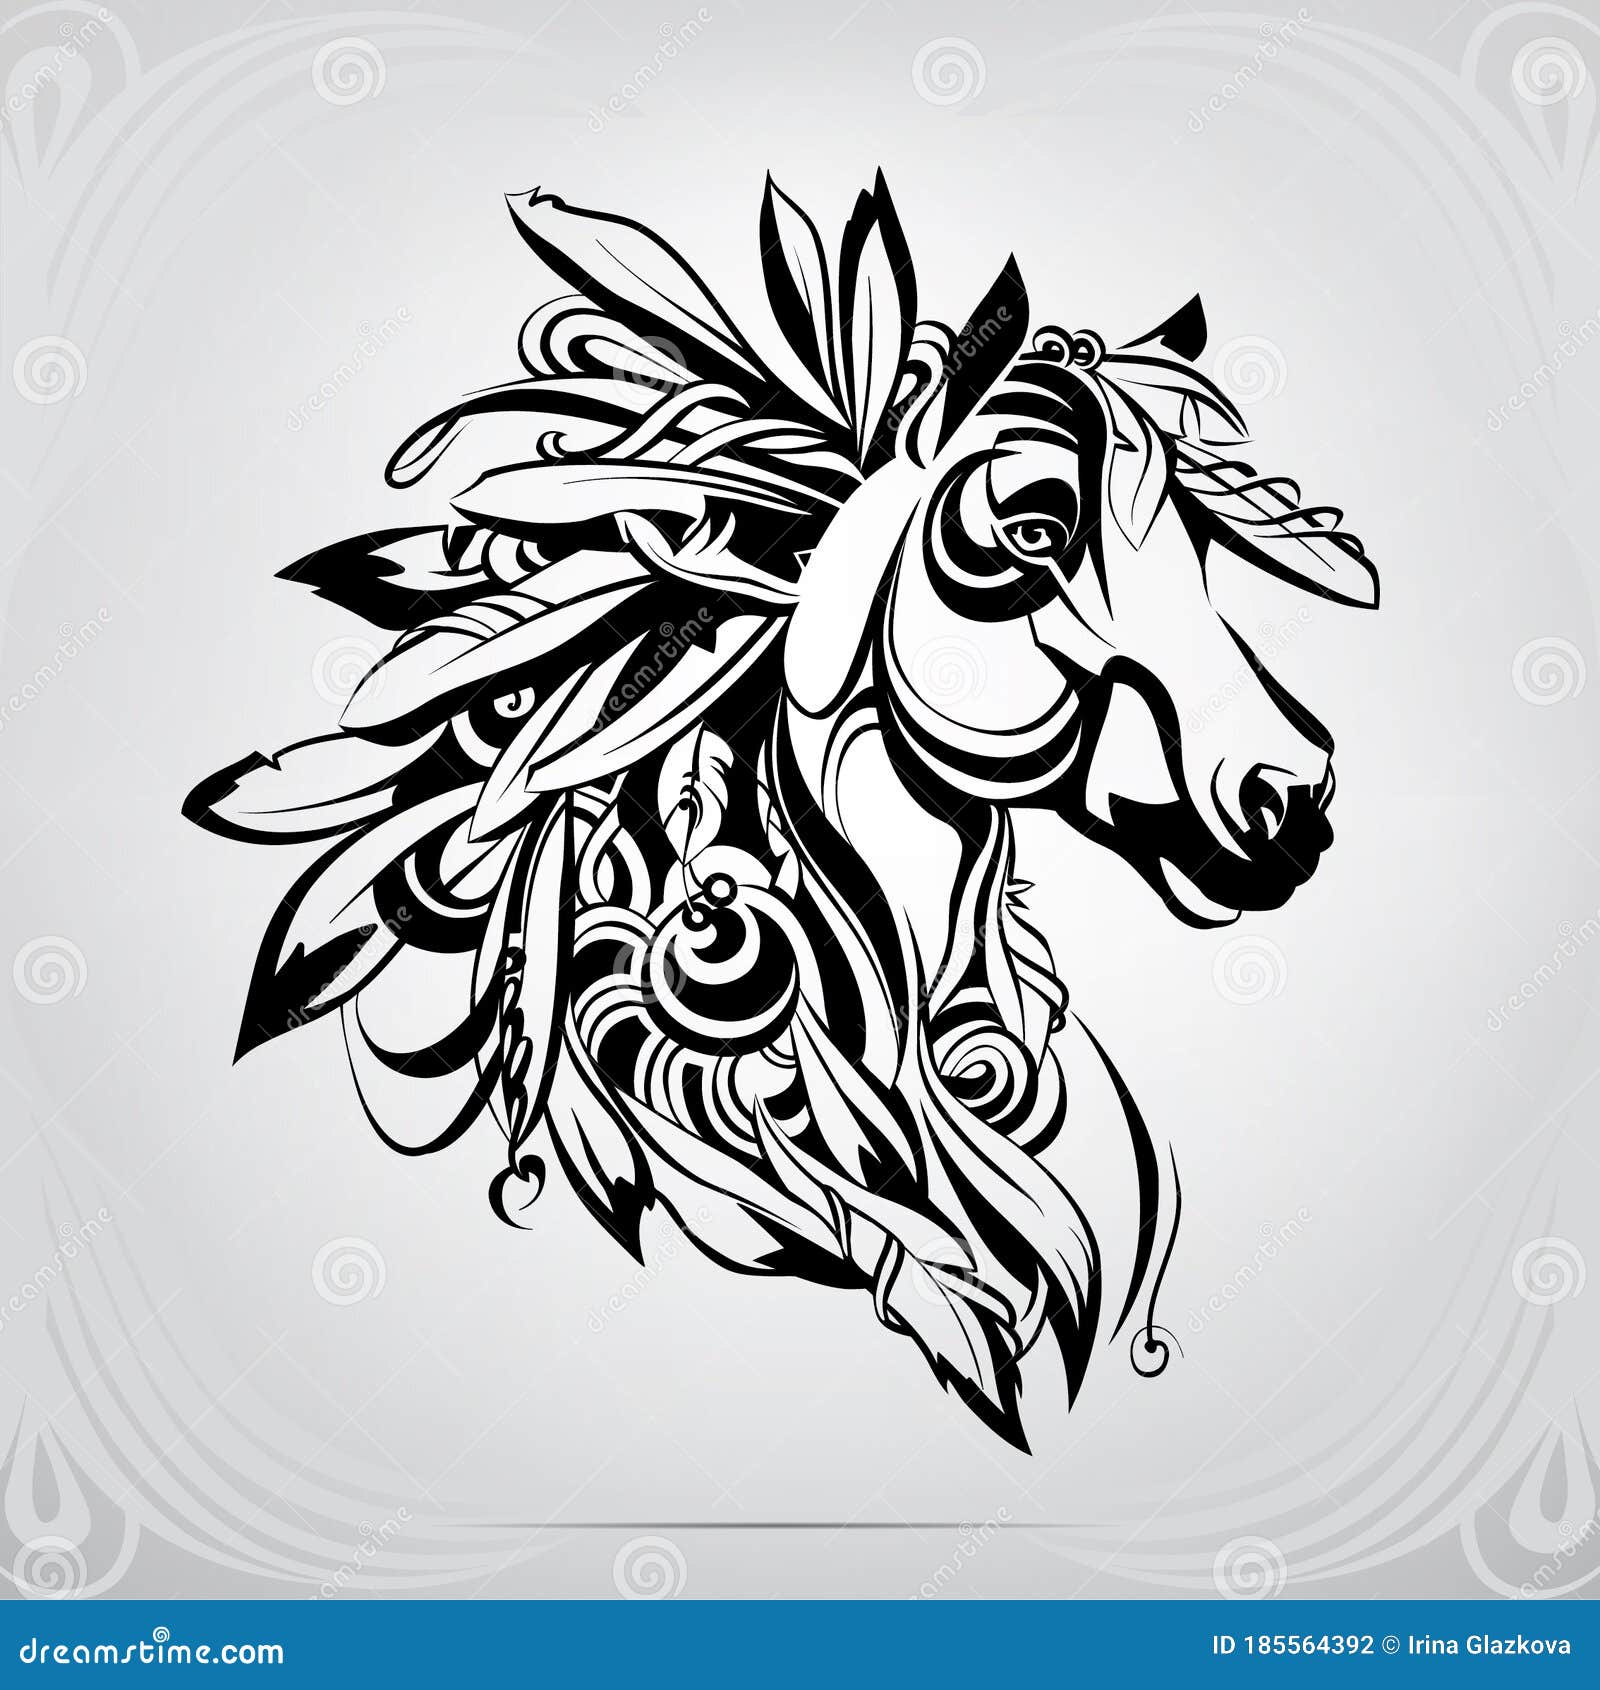 Lower back tattoos   Native american tattoos Native american horse tattoo  Horse tattoo